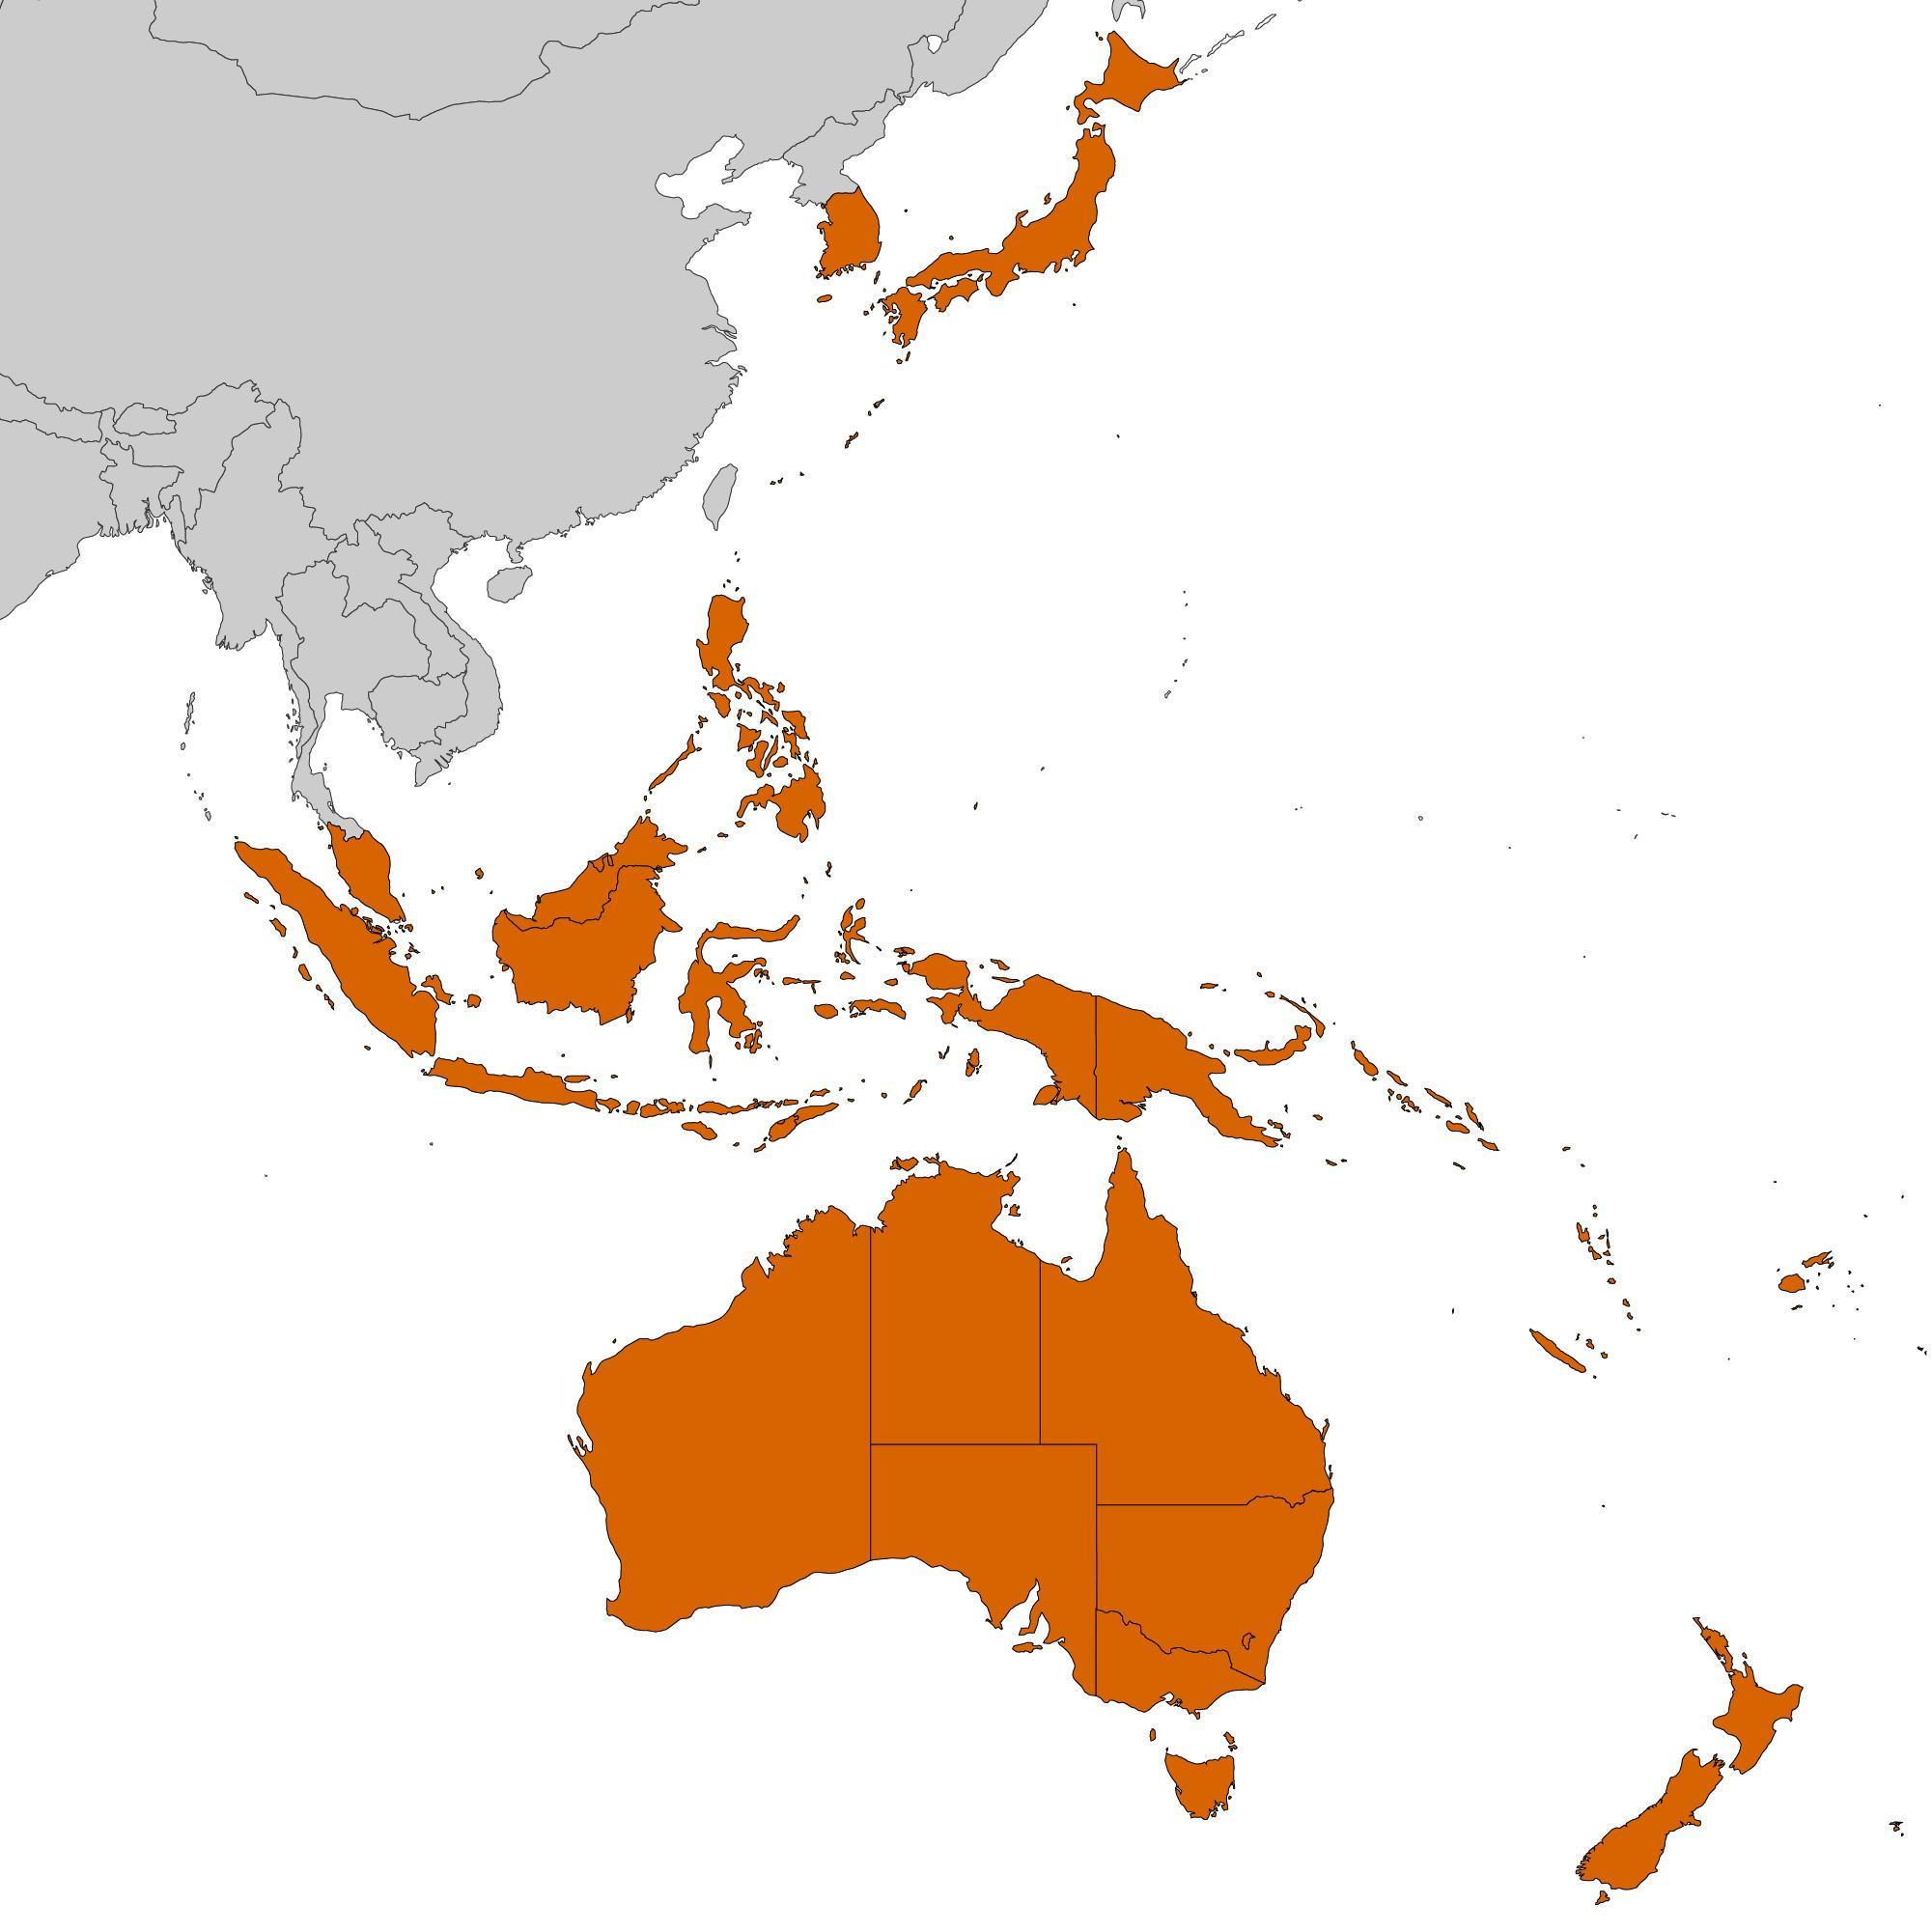 Asia-Pacific Region (APR)